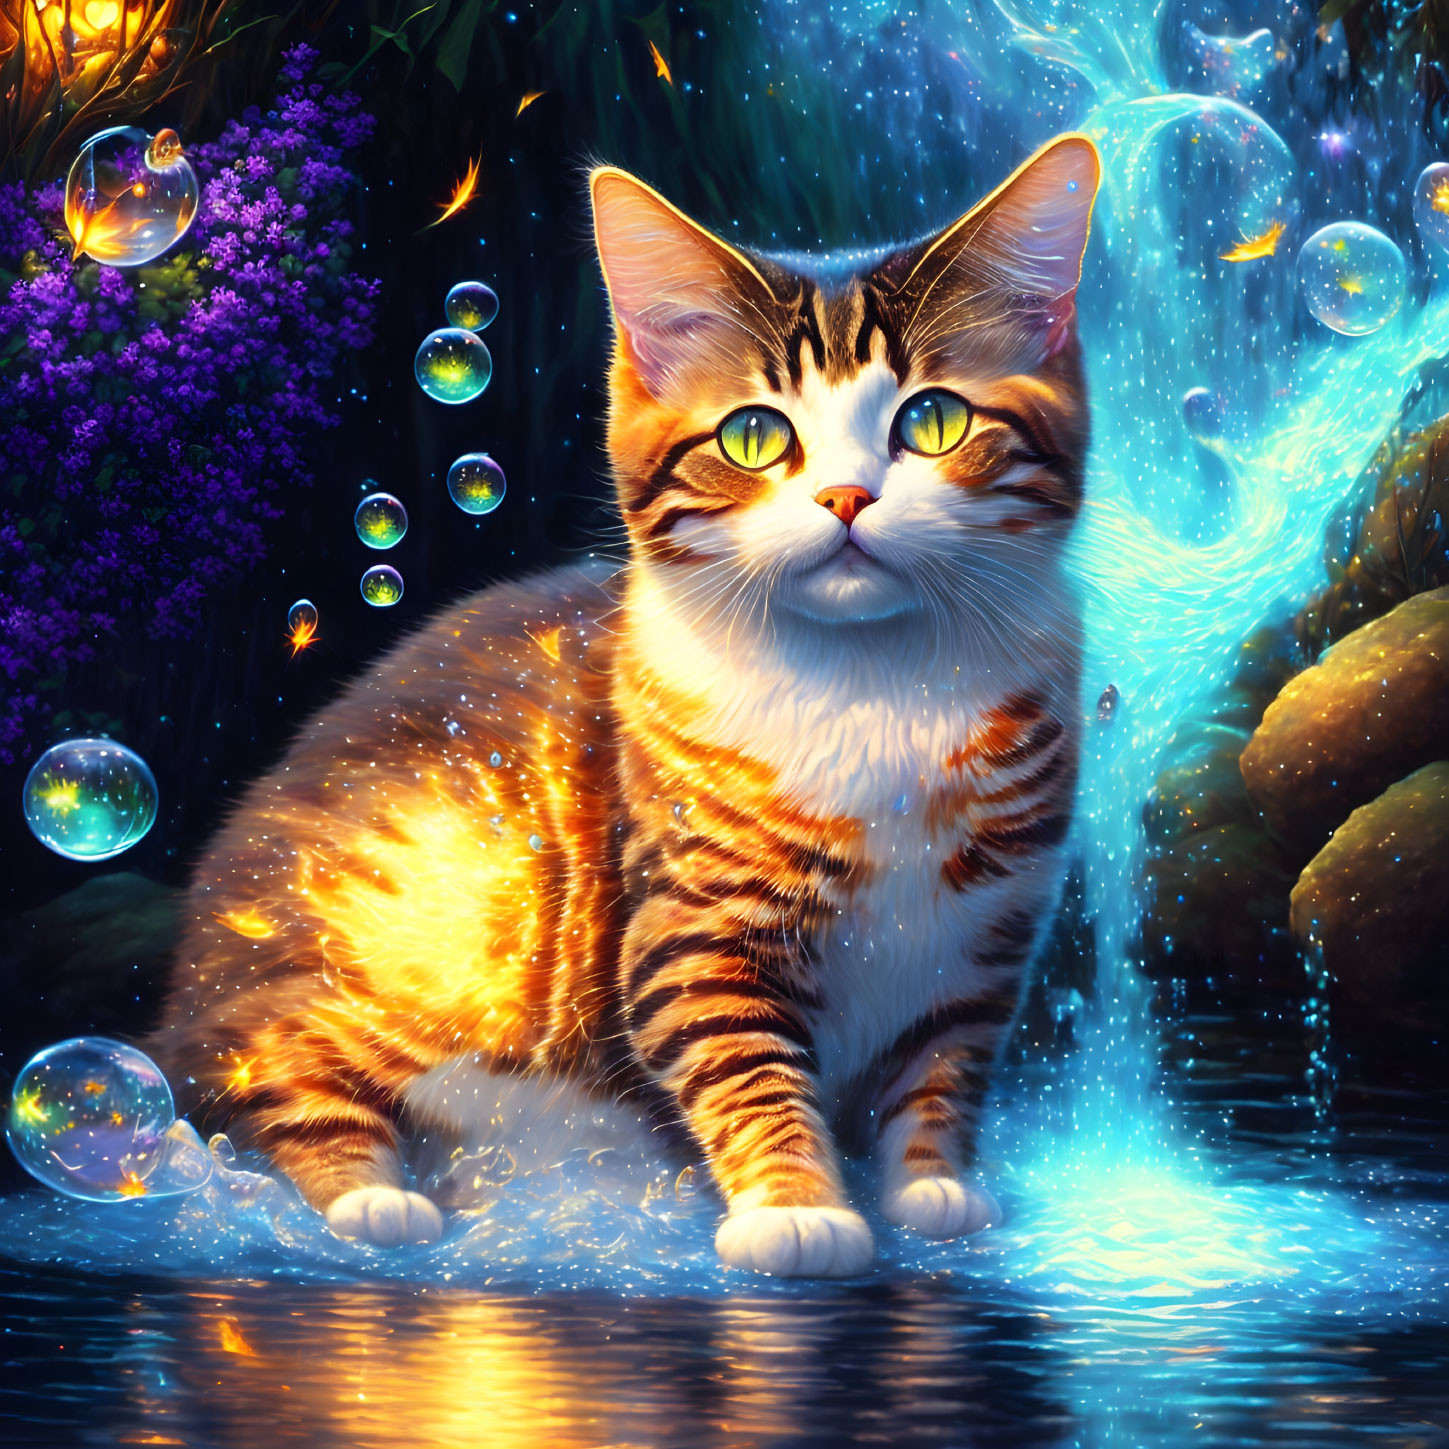 Vibrant digital art: Orange tabby cat in magical glowing setting